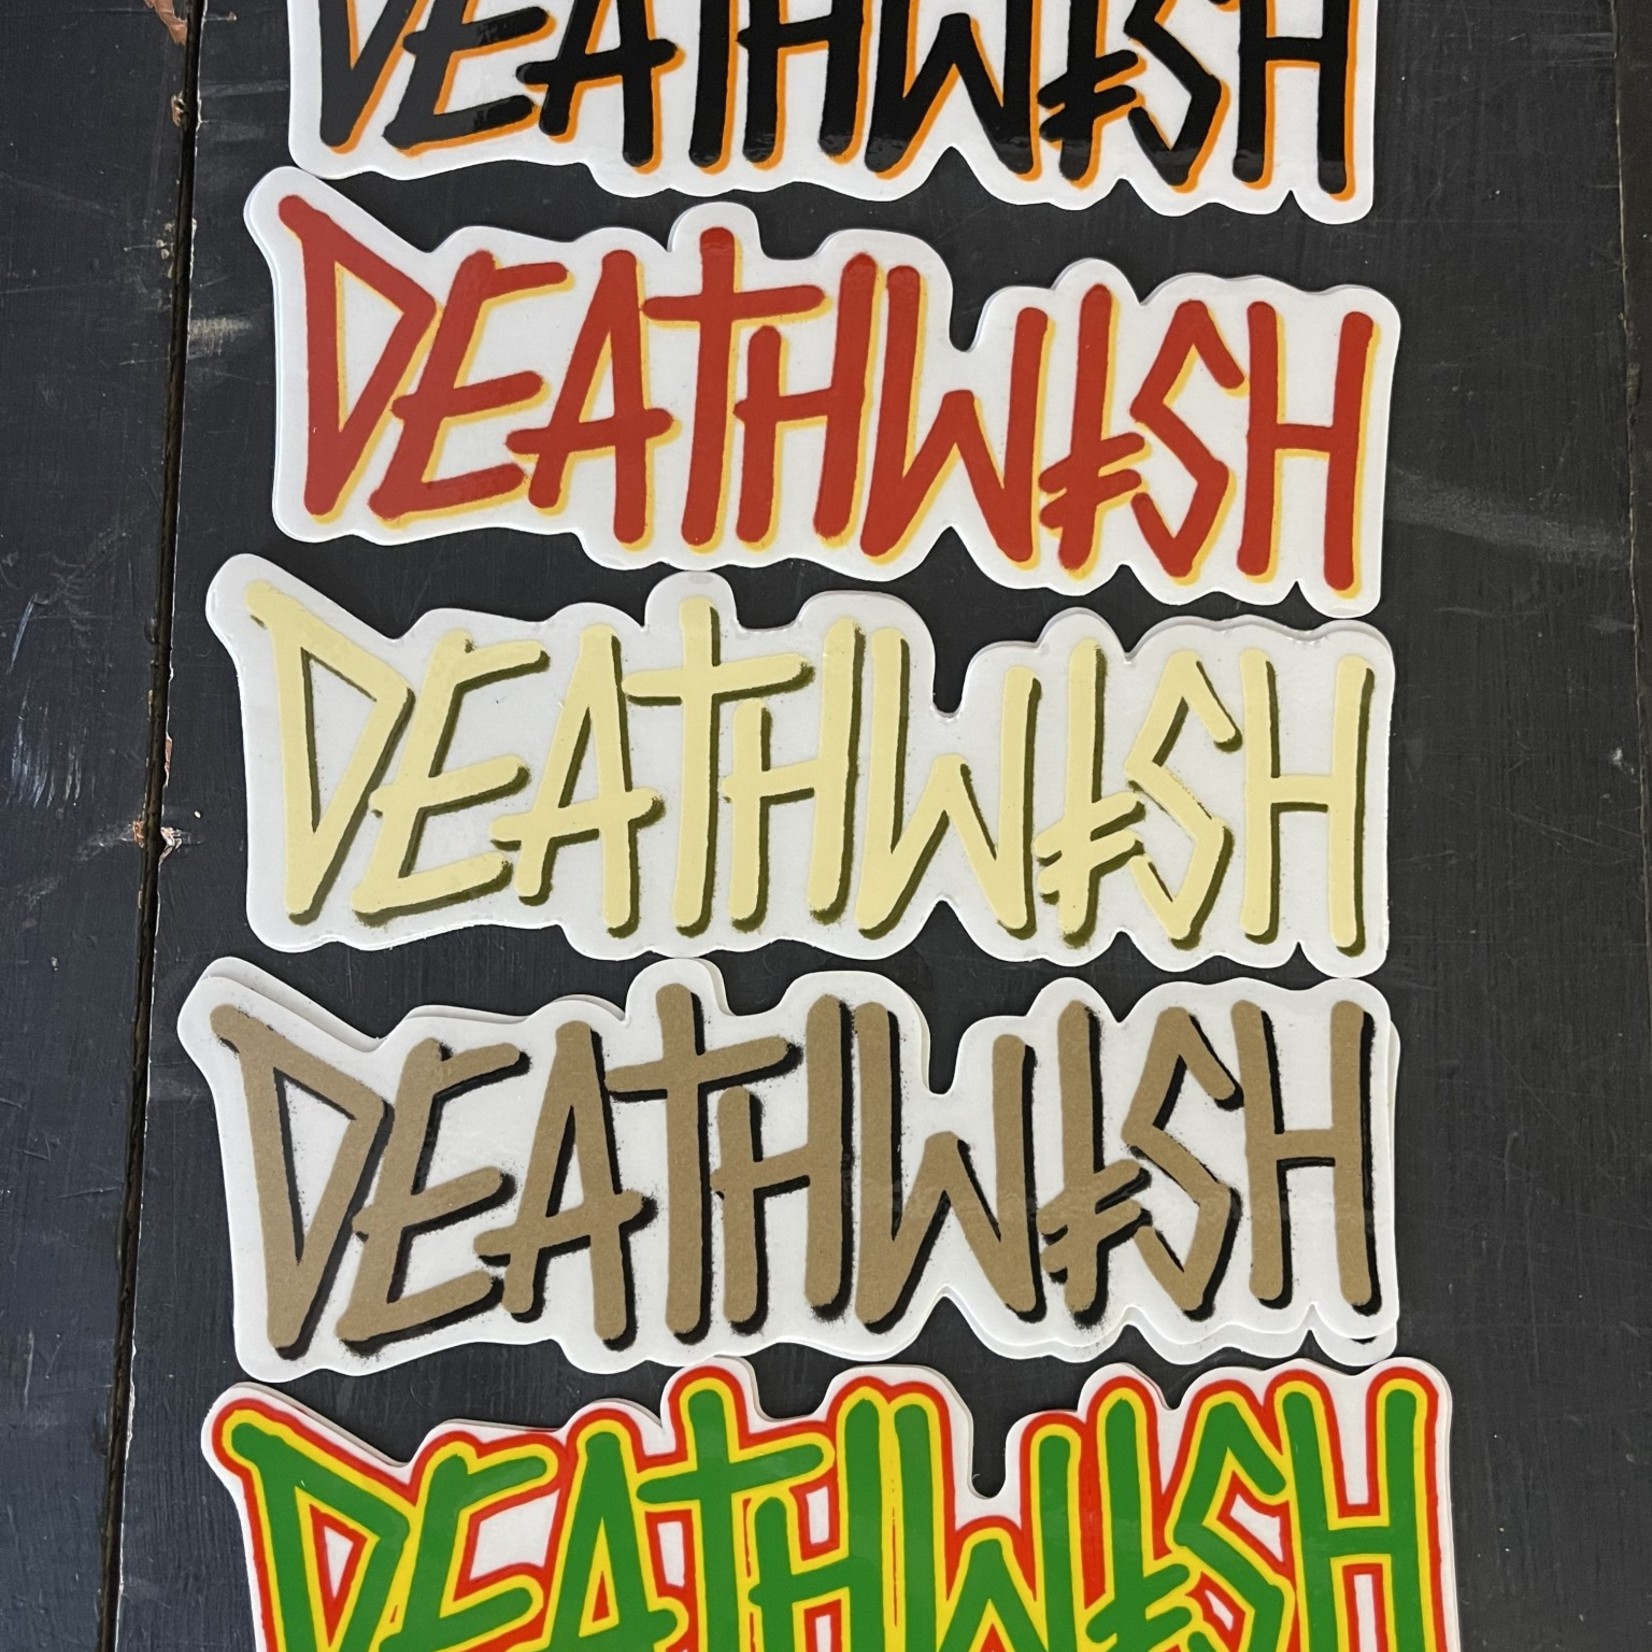 Death Wish Deathwish Deathspray III Sticker (Assorted Colors) 6" x 2"